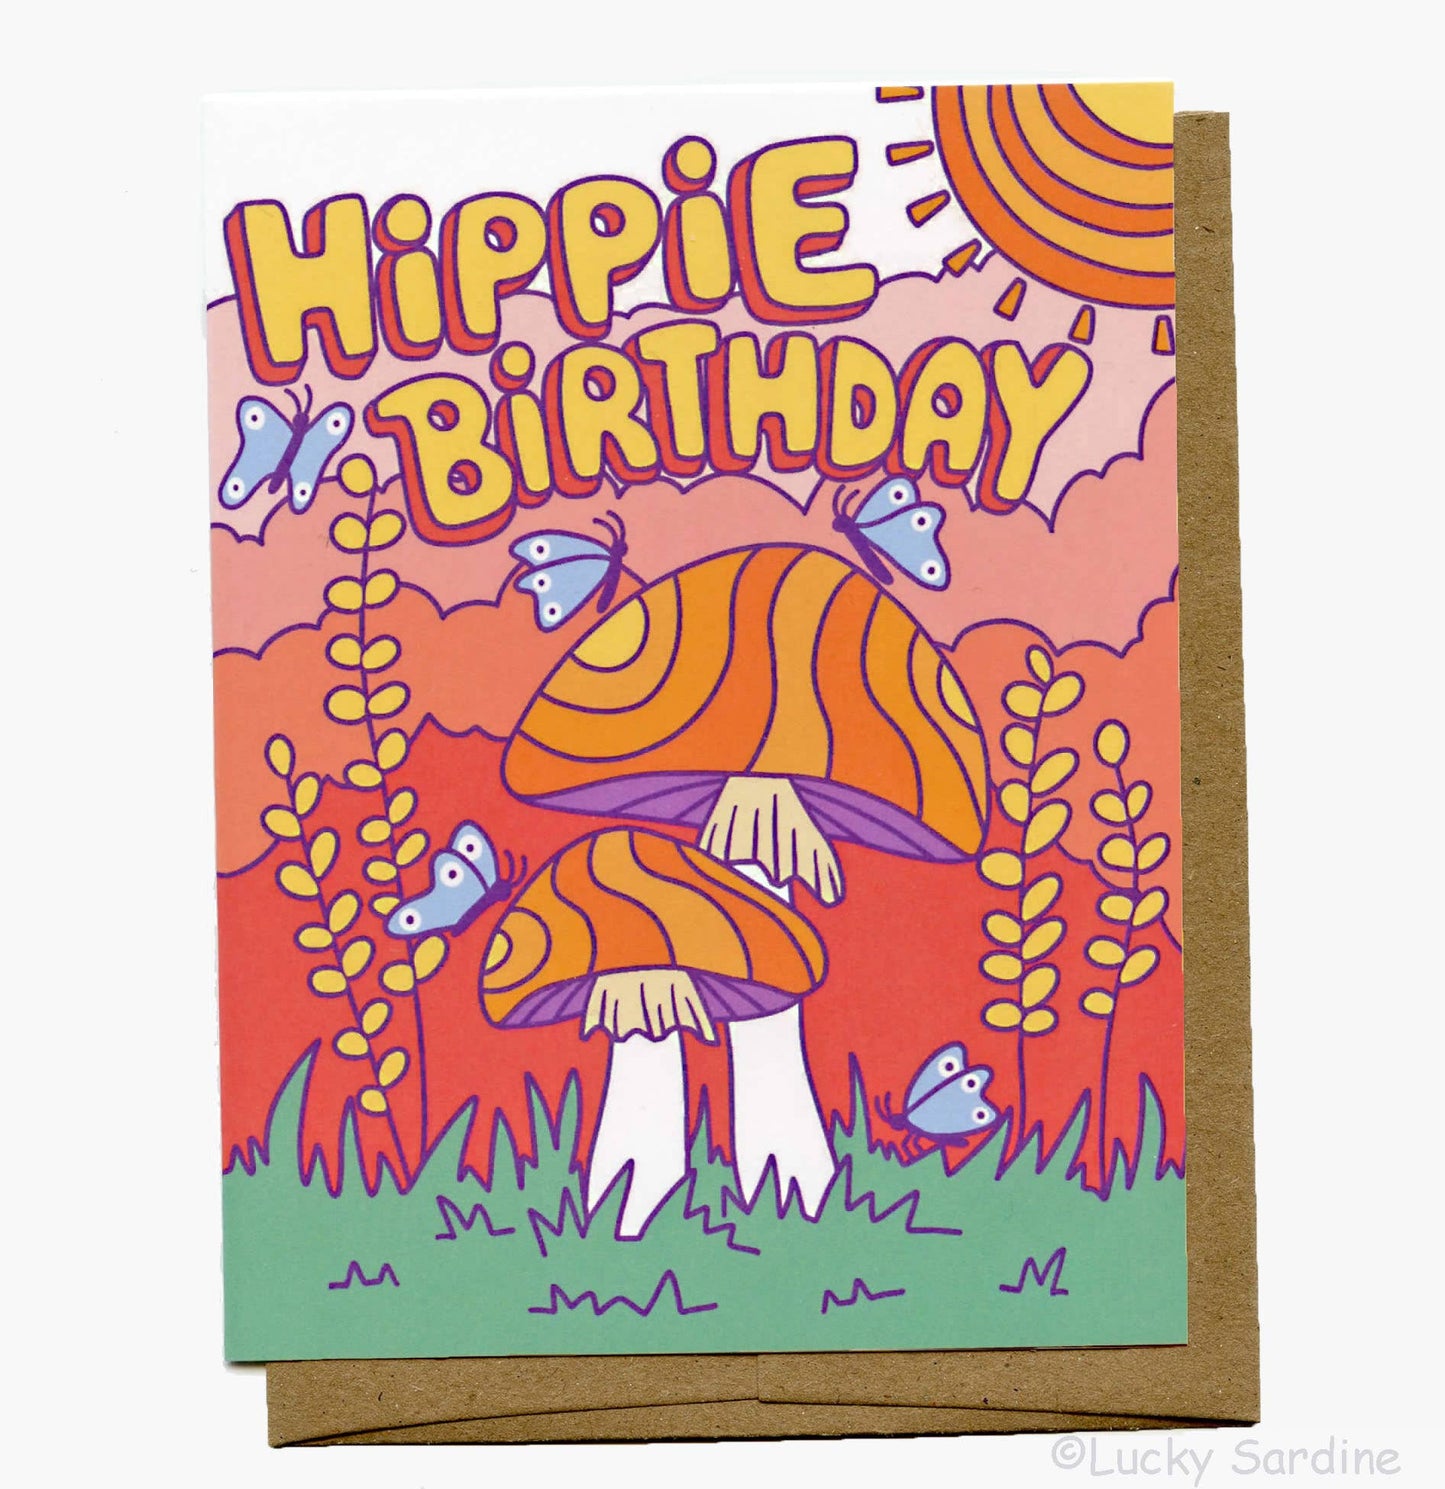 Hippie birthday, groovy mushroom card